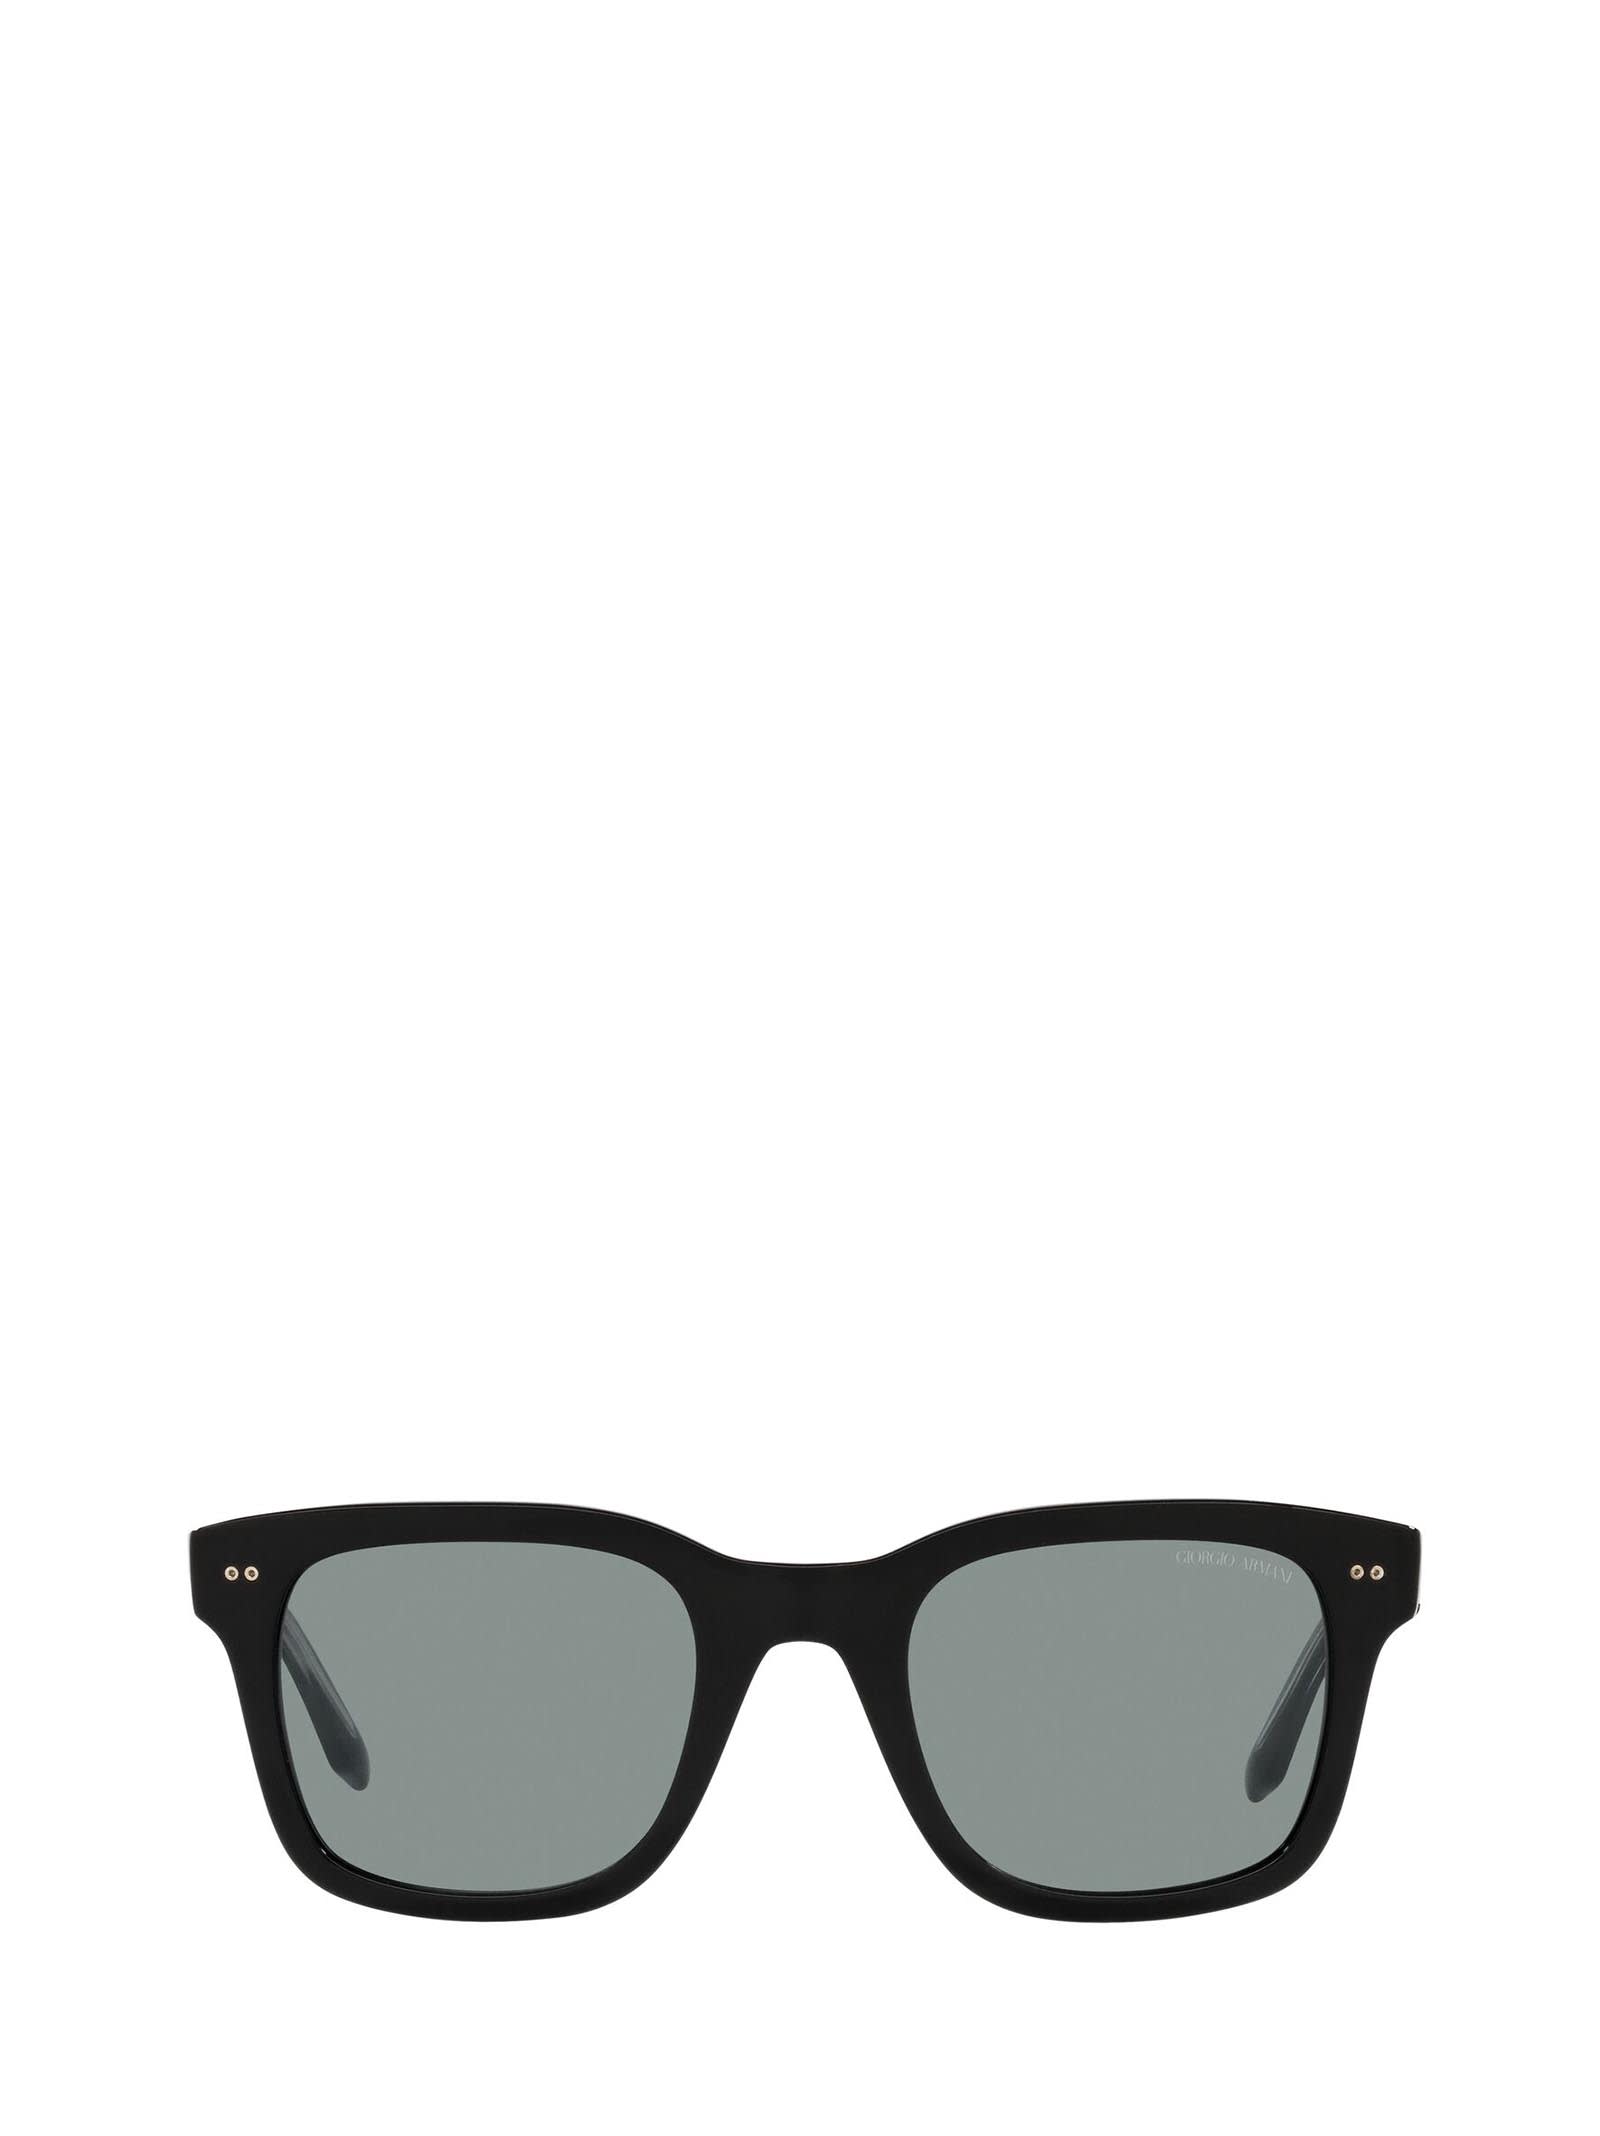 Giorgio Armani Giorgio Armani Ar8138 Black Sunglasses